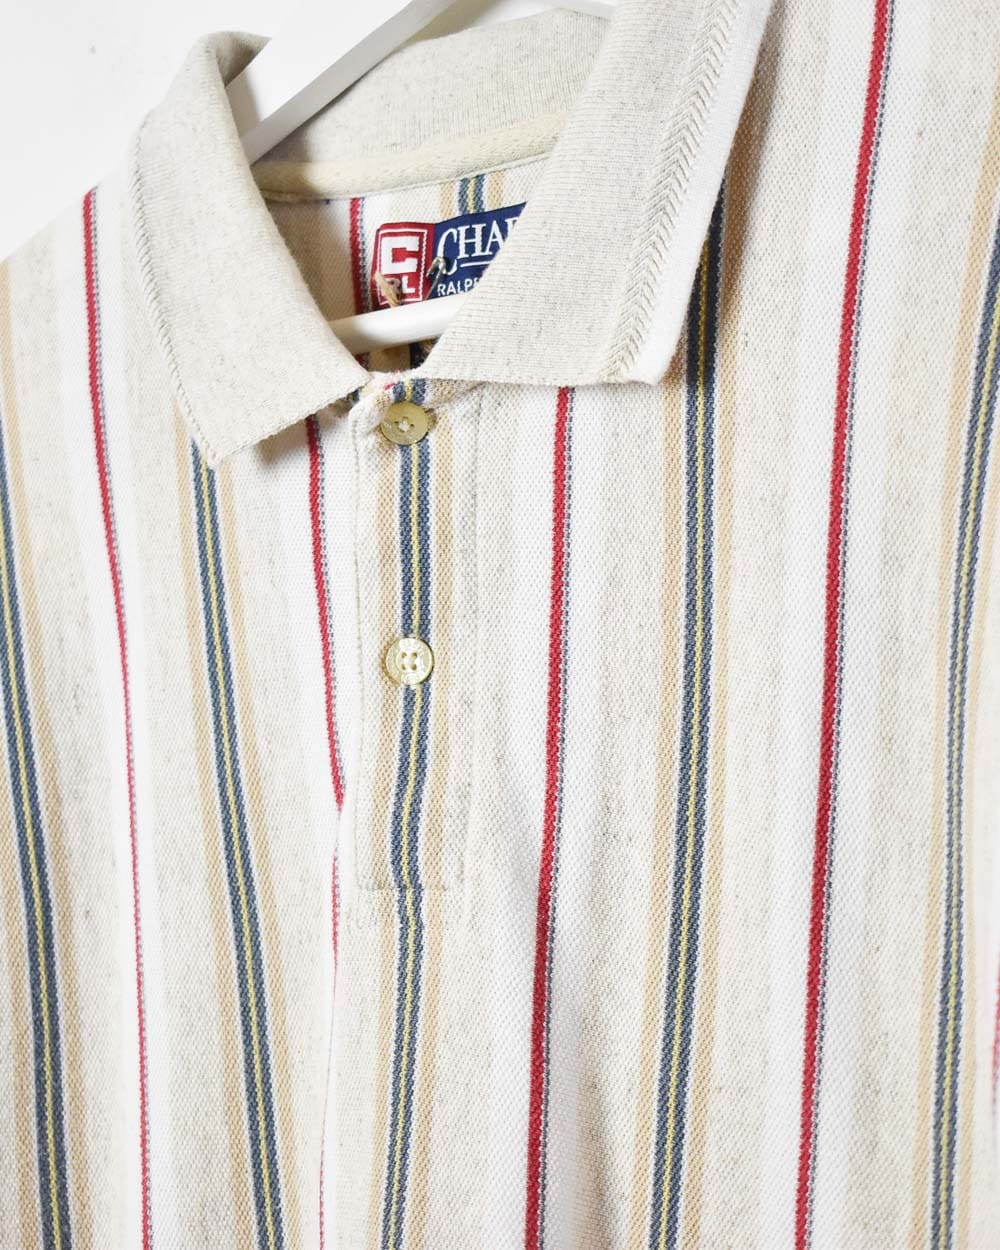 Neutral Chaps Ralph Lauren Striped Polo Shirt - Large